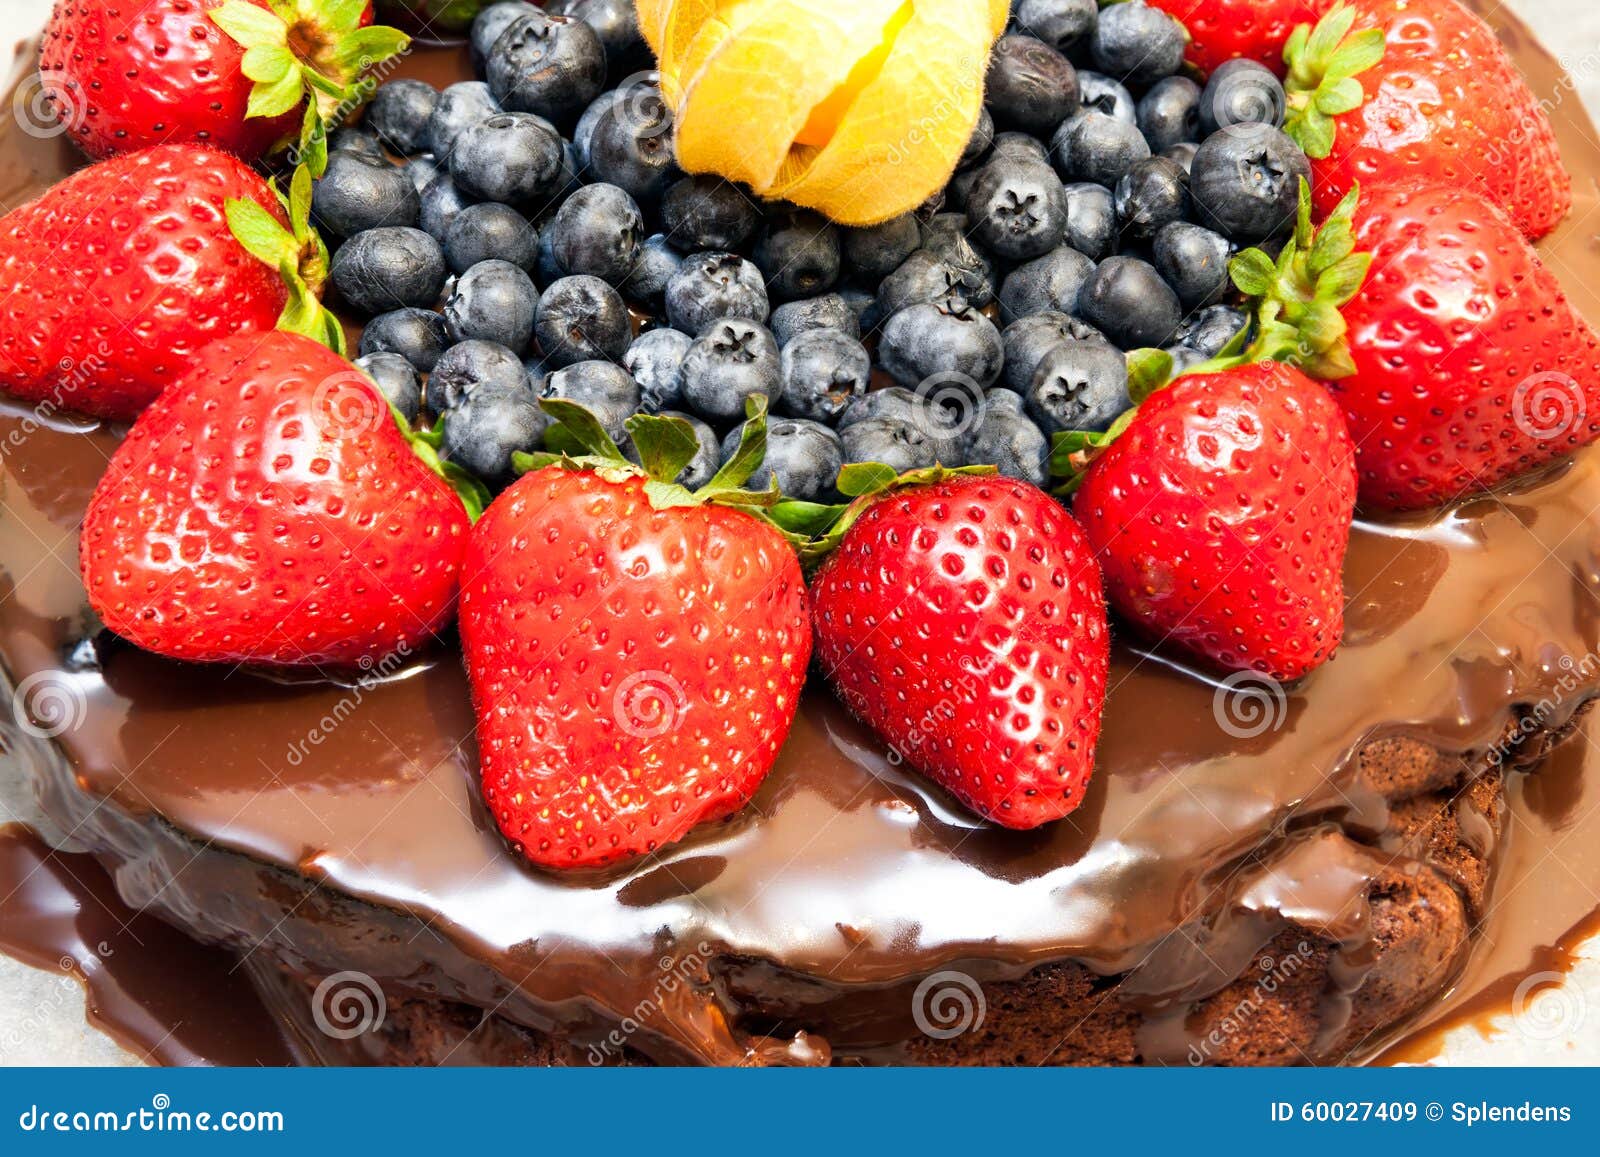 Chocolate Cake with Berries Stock Image - Image of angle, glazed: 60027409